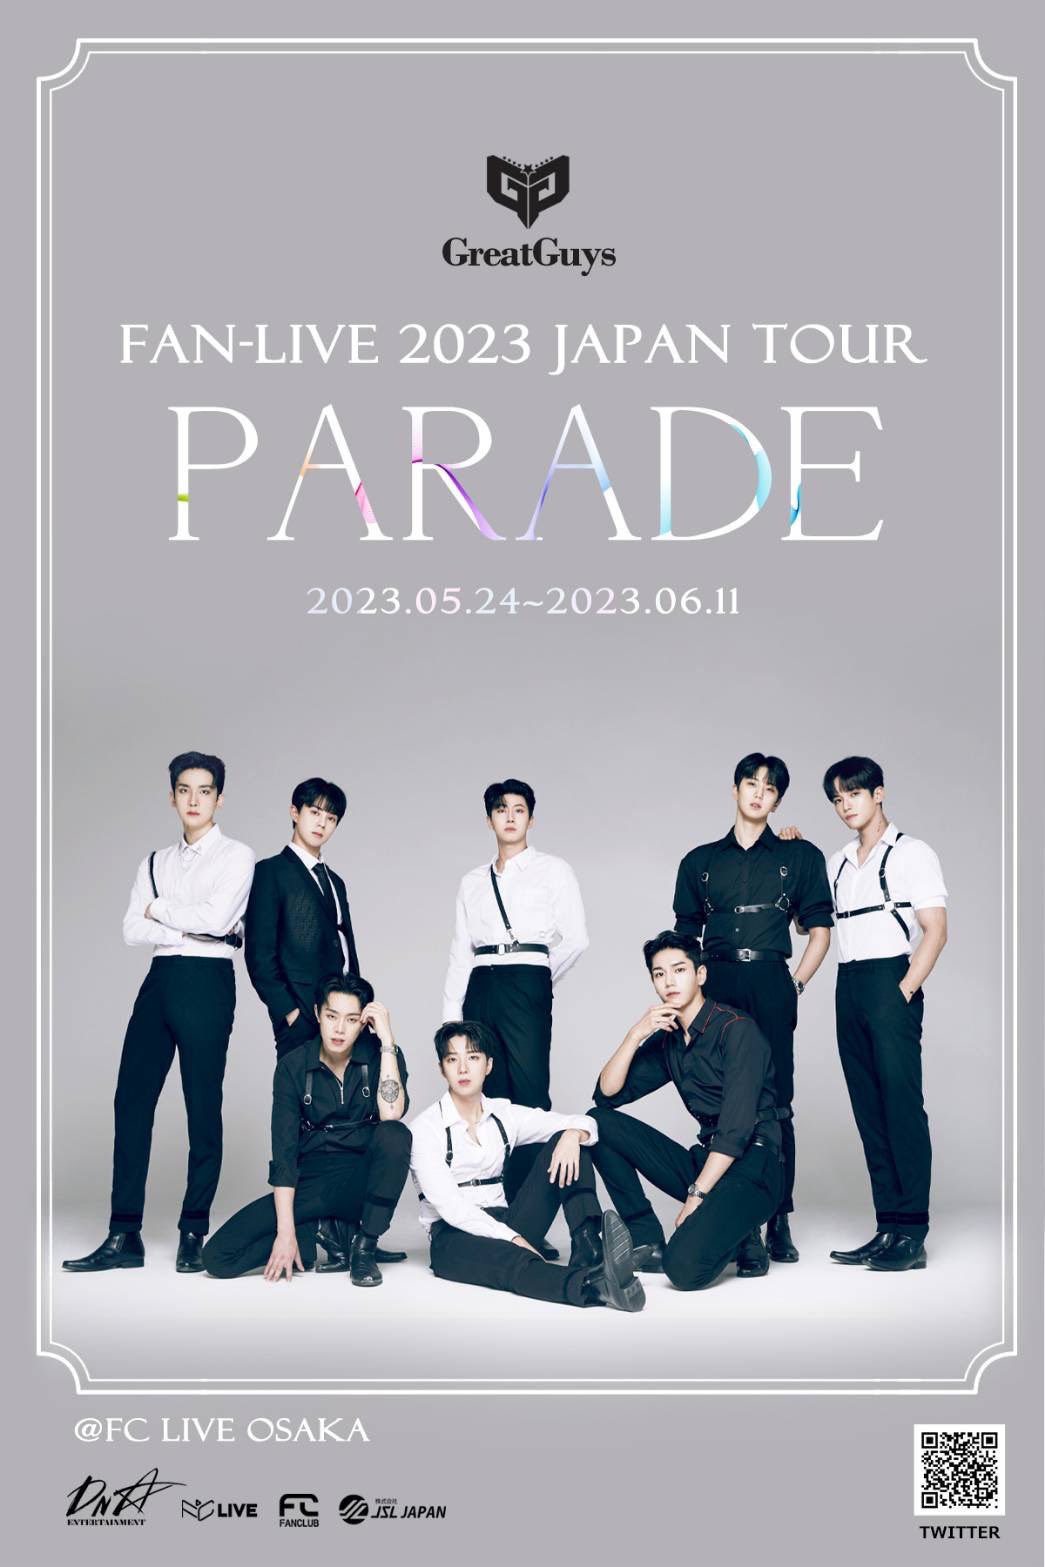 GreatGuys FANｰLIVE 2023 JAPAN TOUR PARADE